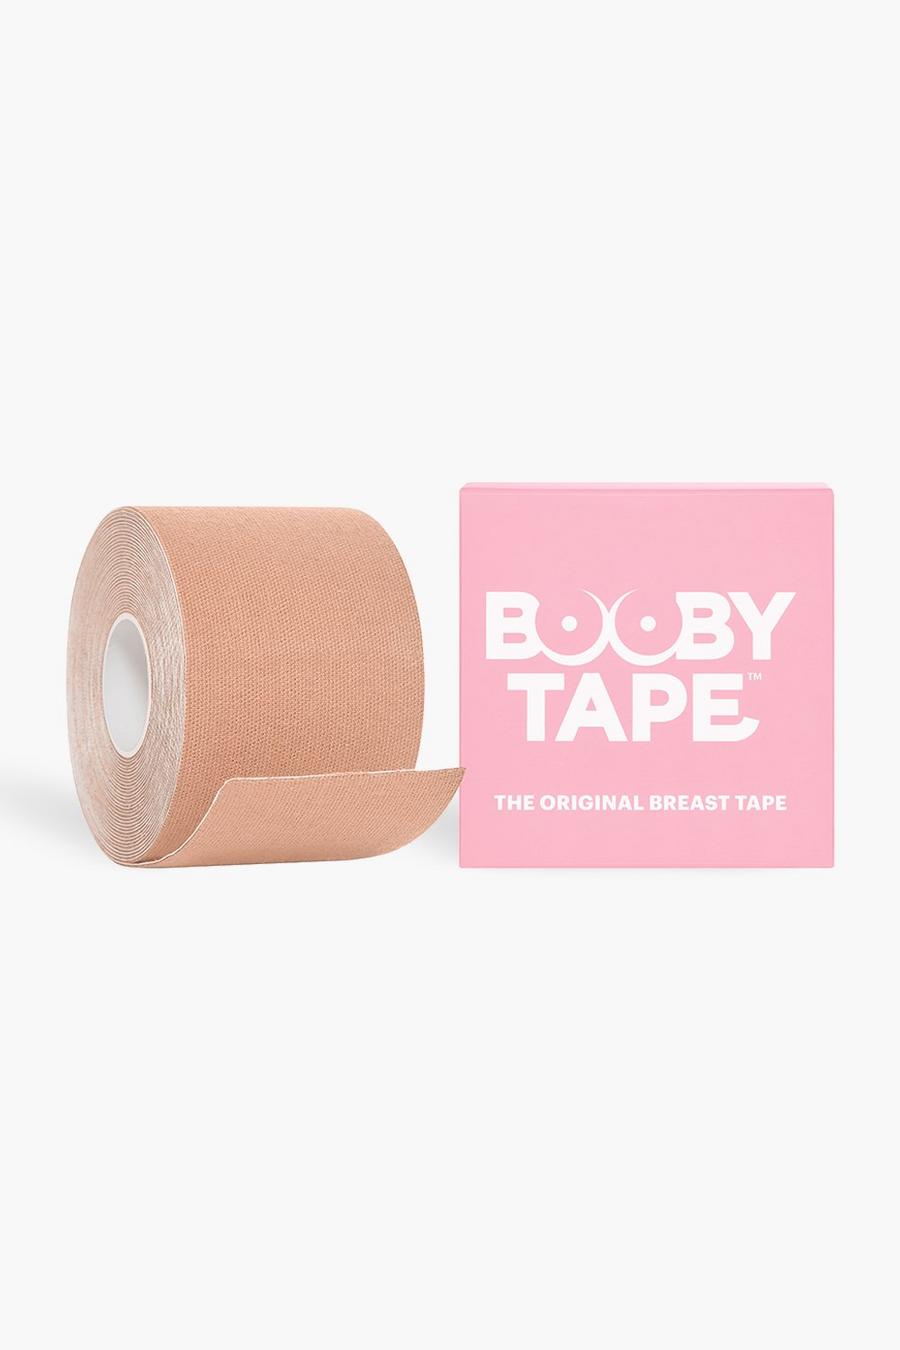 Booby-Tape Nude 5m Rolle , Hautfarben nude